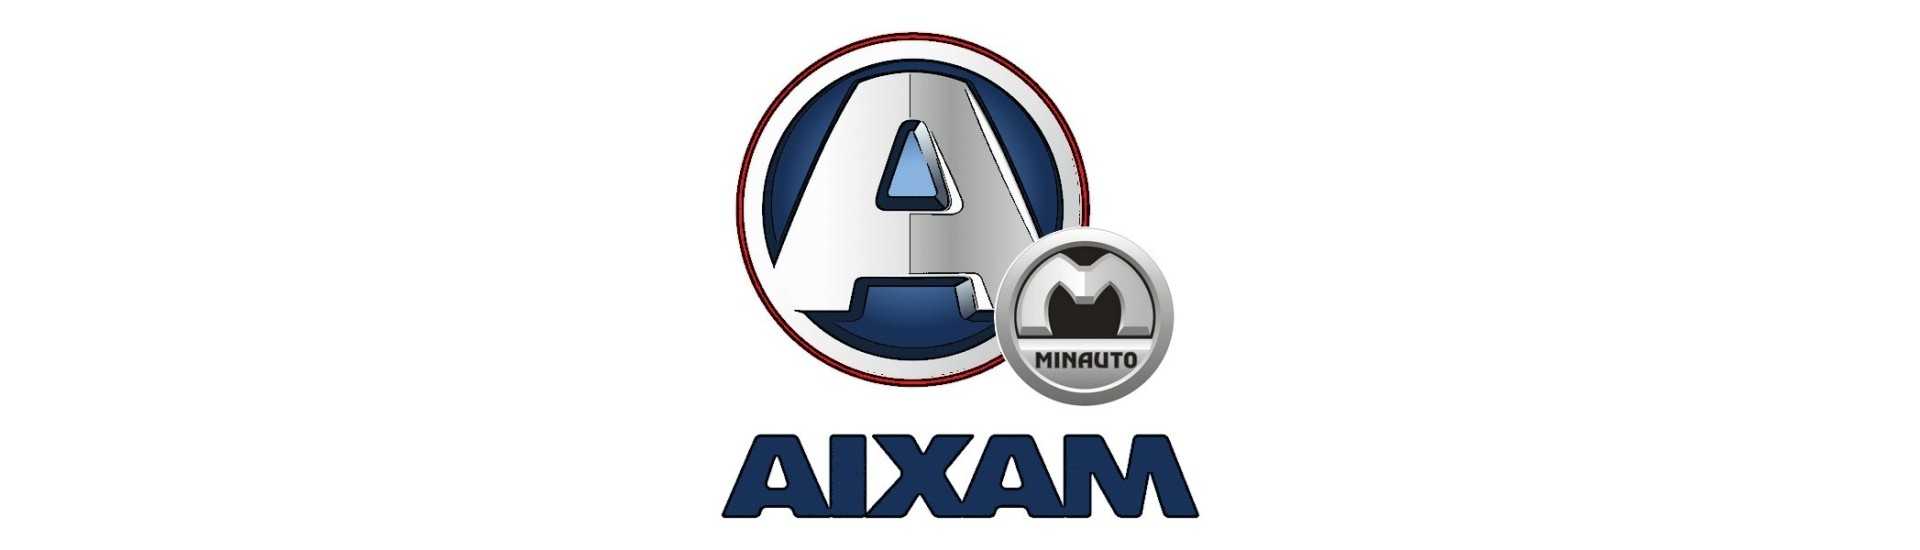 Flux flexibil la cel mai bun preț auto fără permis Aixam Minauto